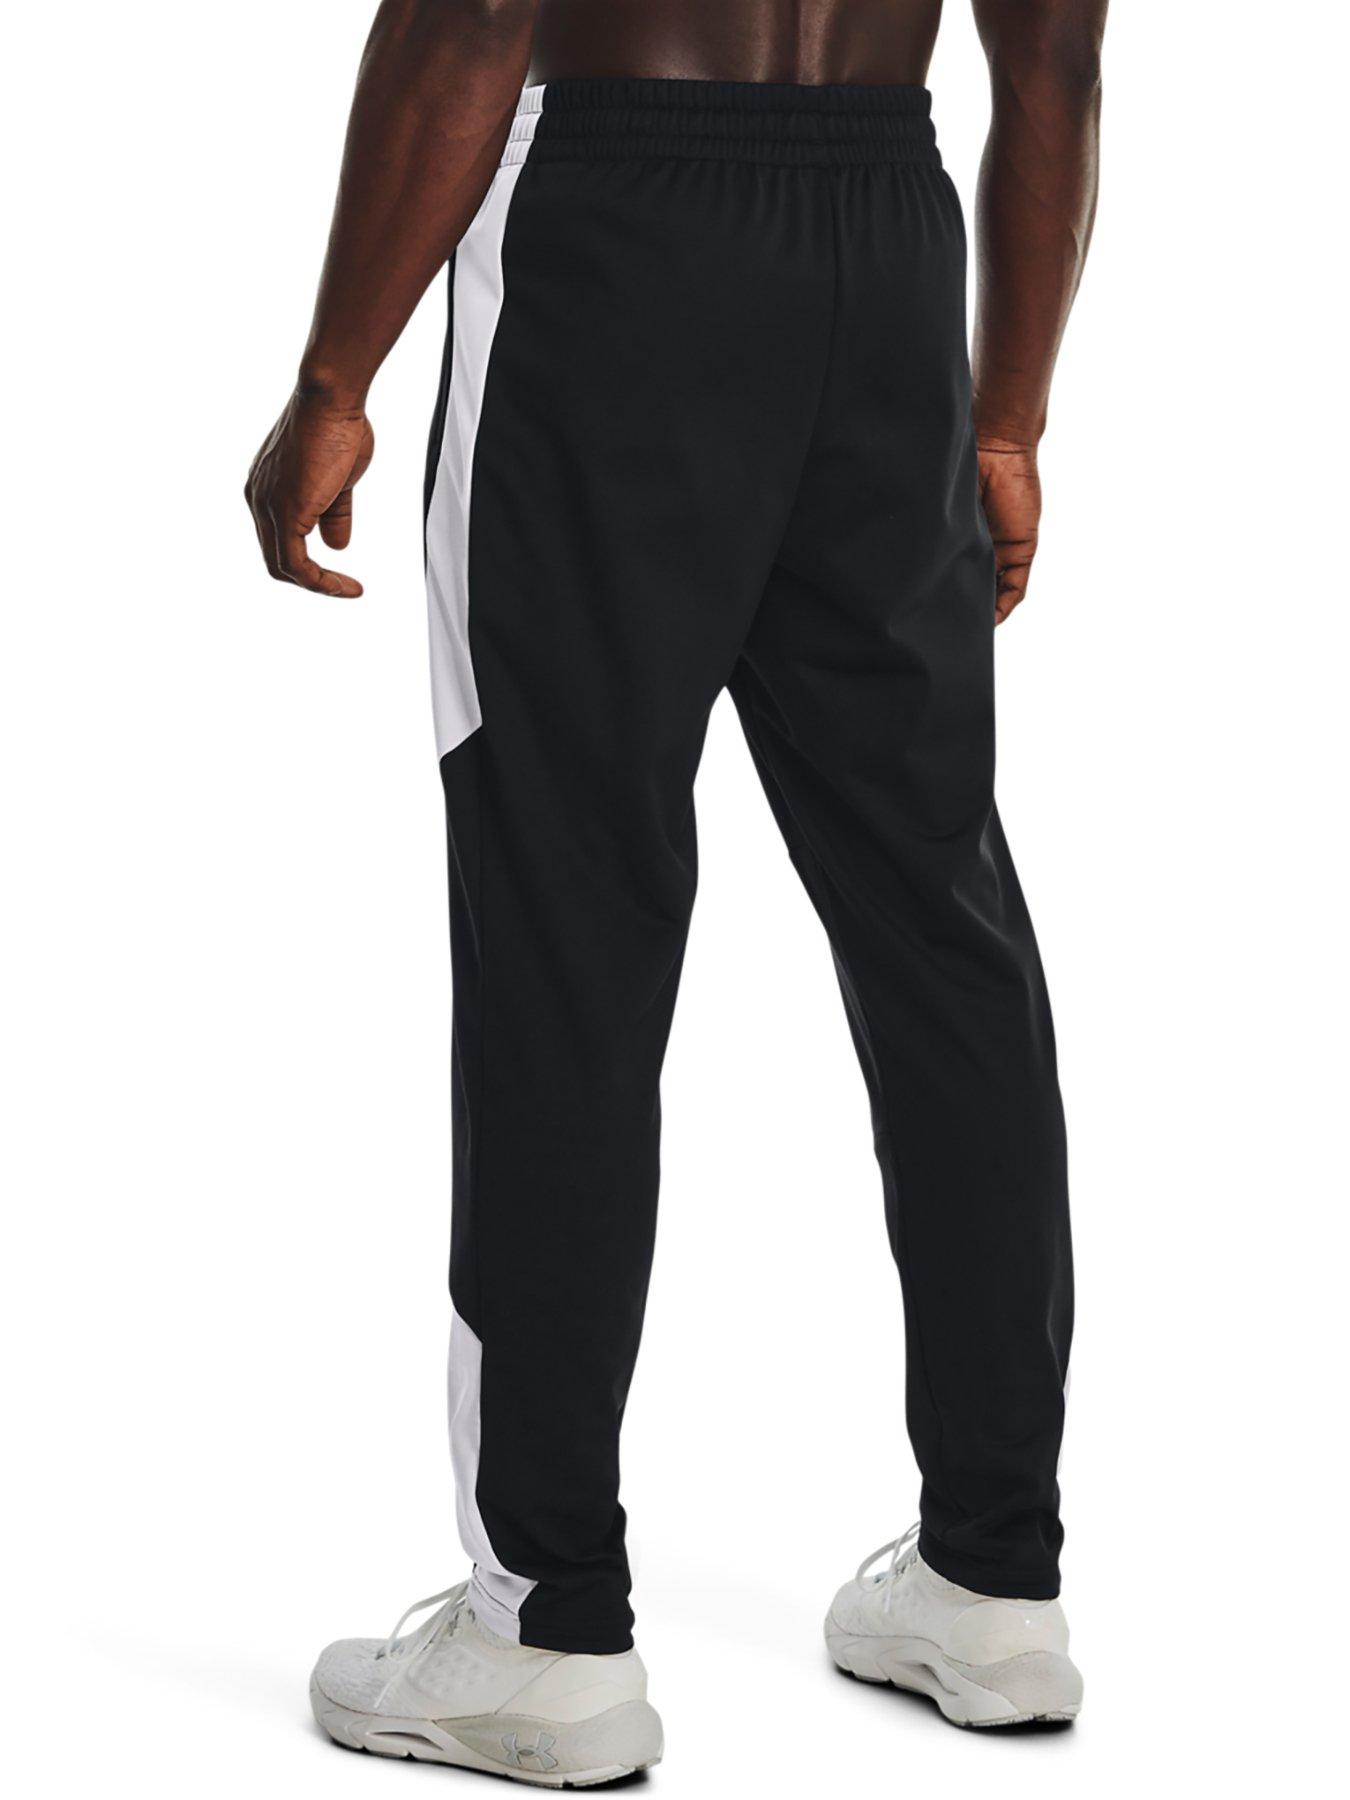 UNDER ARMOUR Training Tricot Fashion Track Pants - Black/White